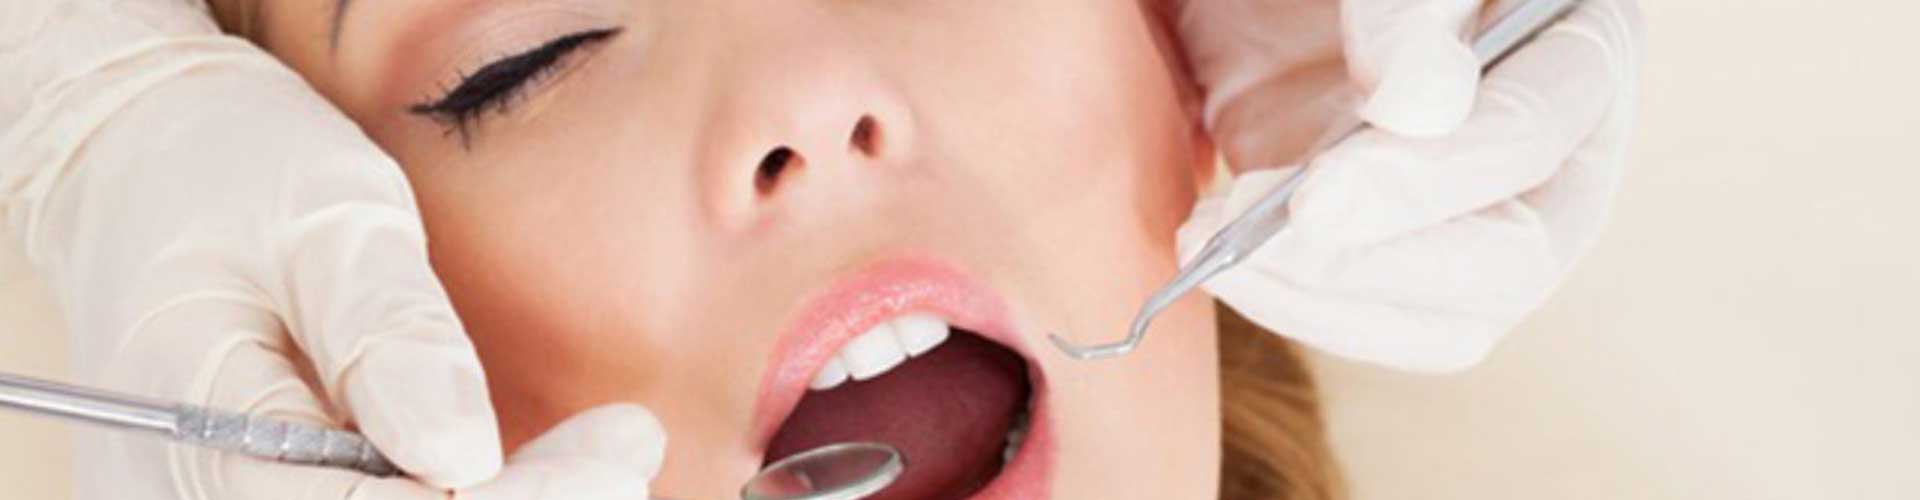 Sedation Dentistry | Tooth Suite Family Dentistry | General Dentist | Lloydminster